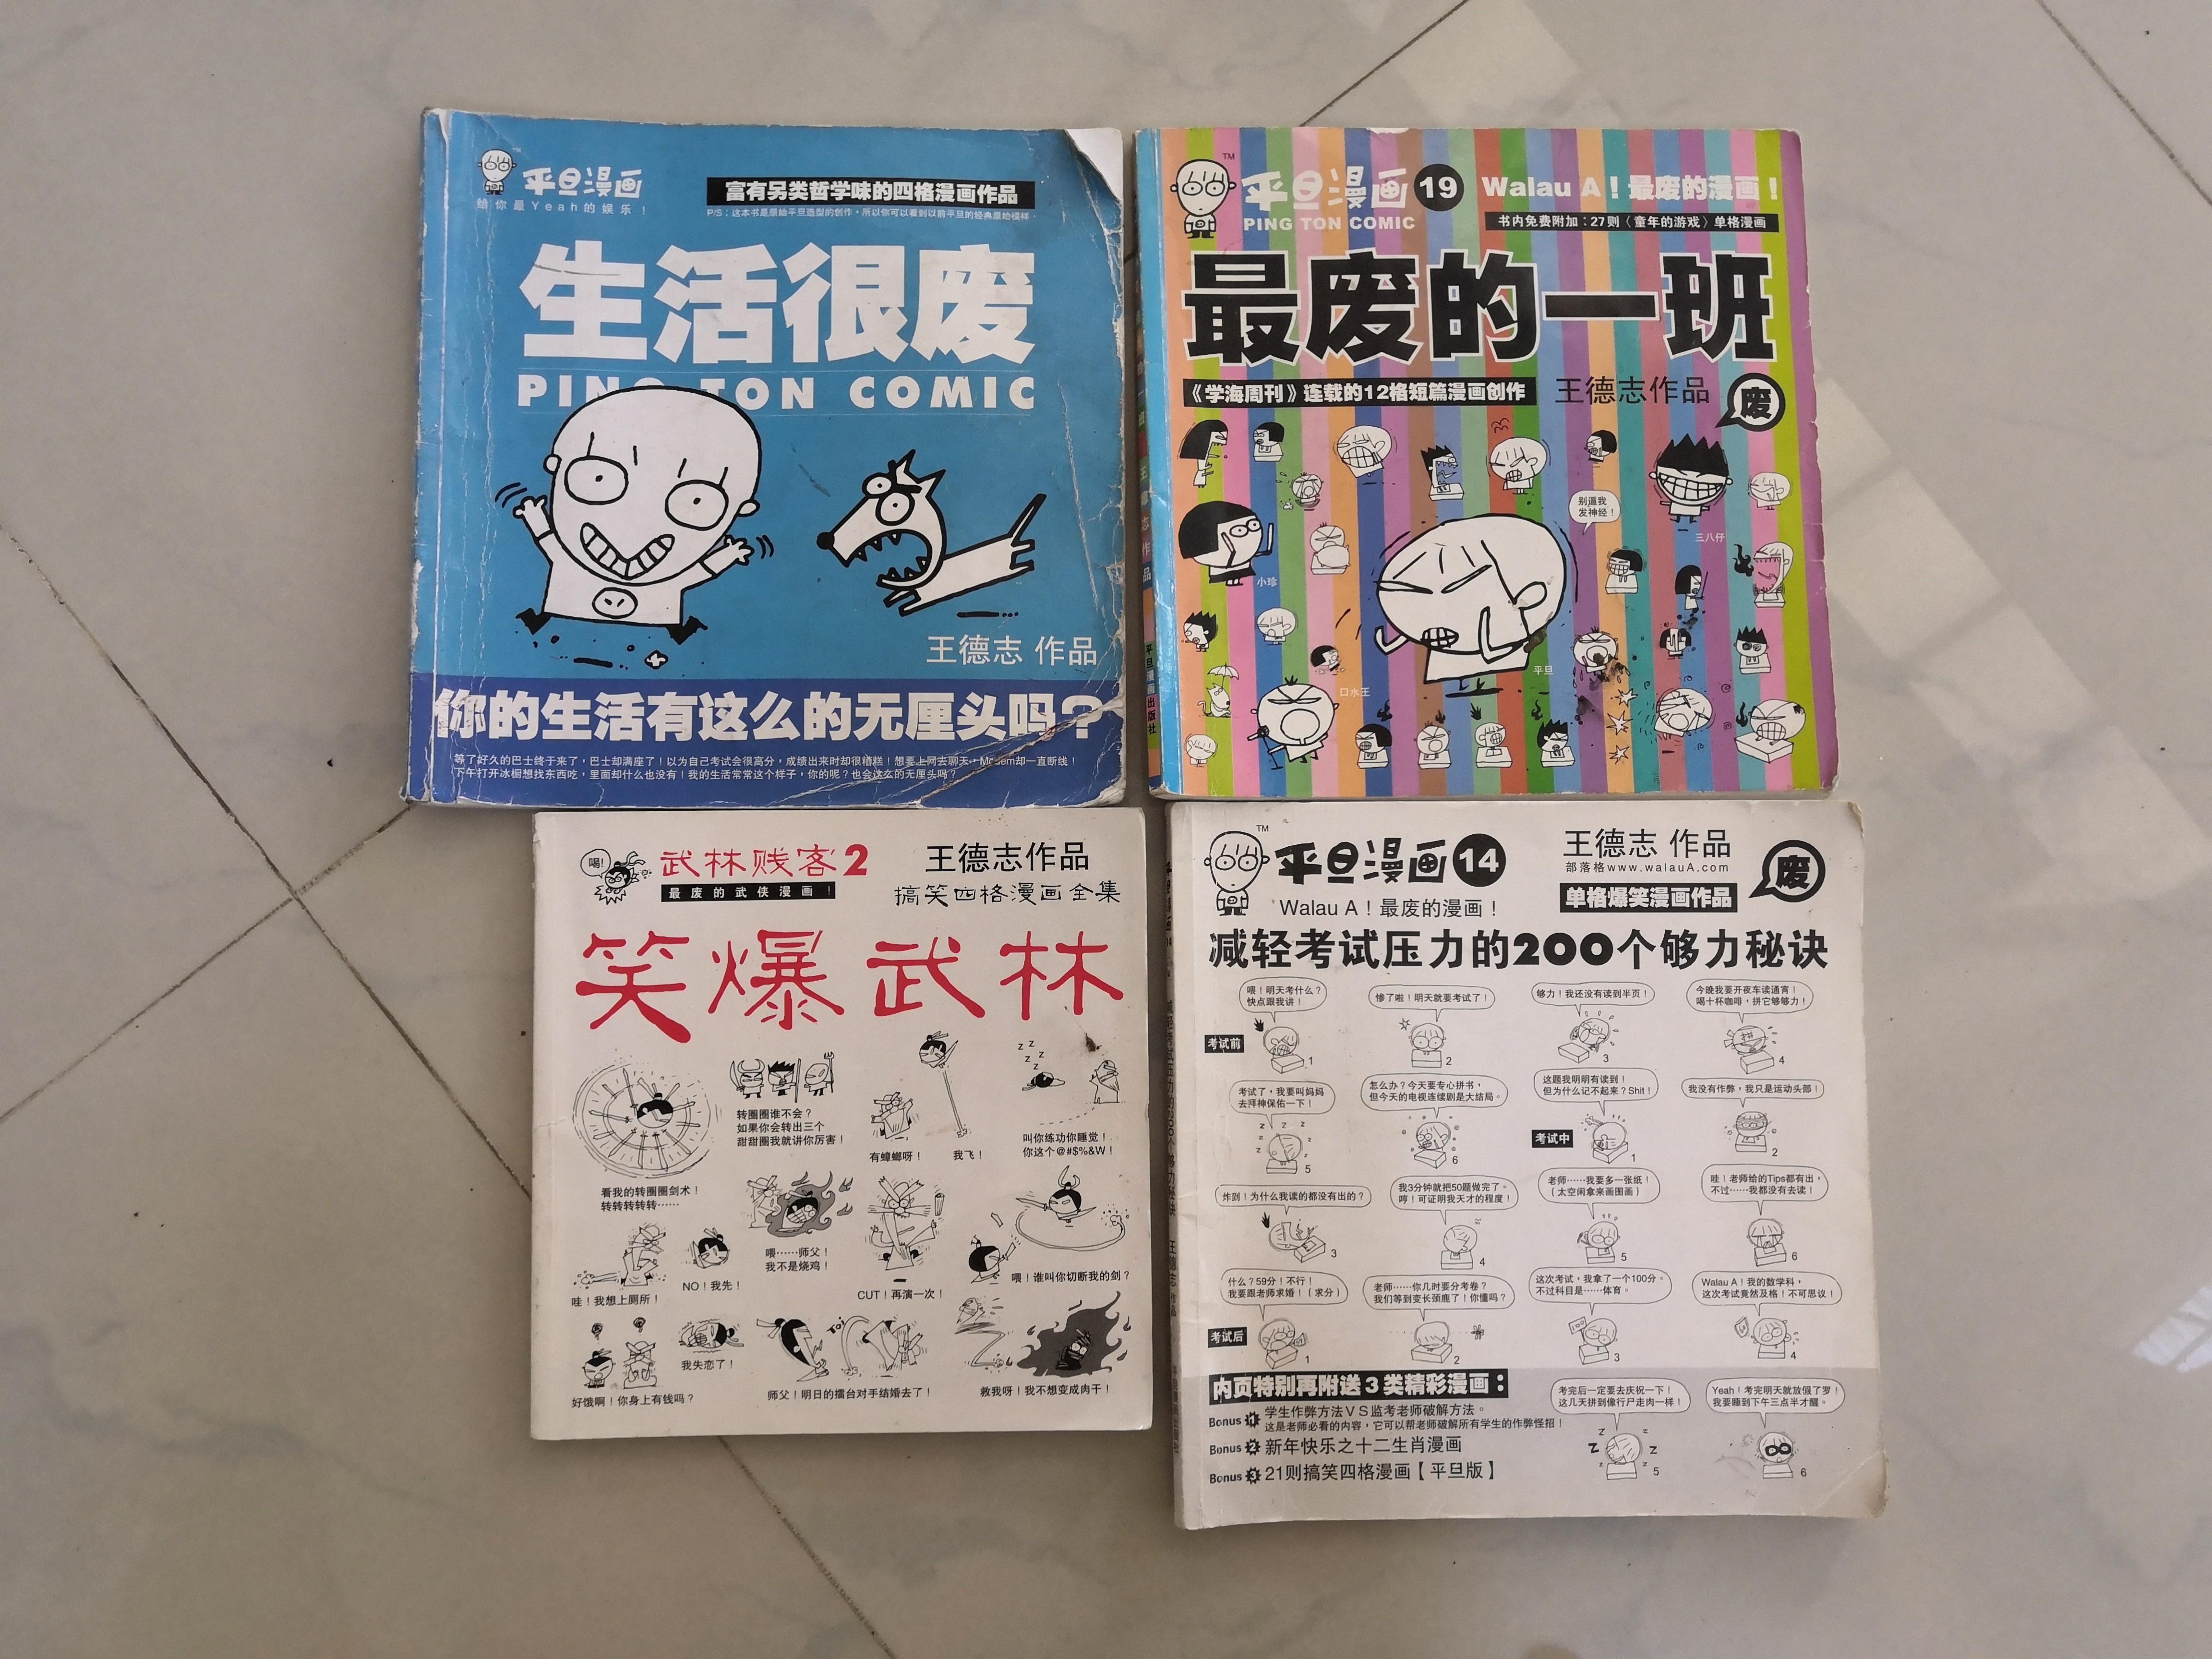 平旦漫画 Books Stationery Comics Manga On Carousell